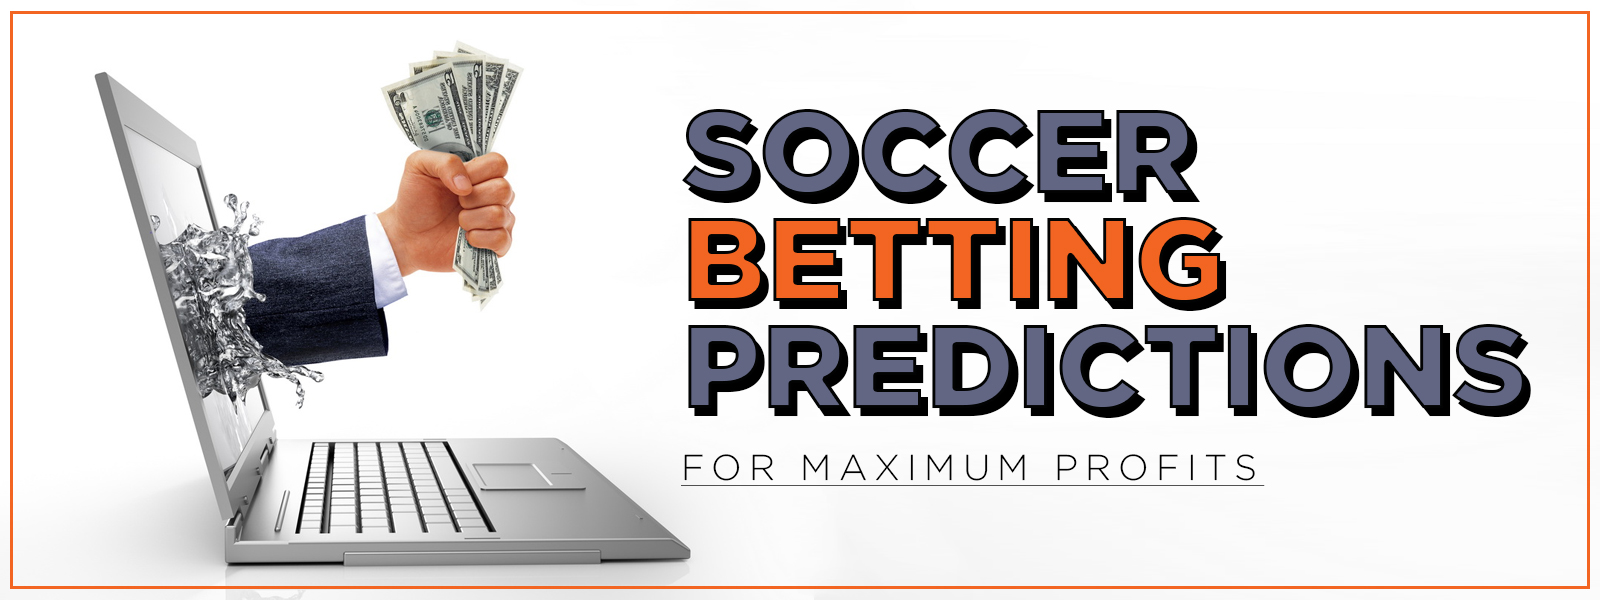 Soccer Betting Predictions for Maximum Profits